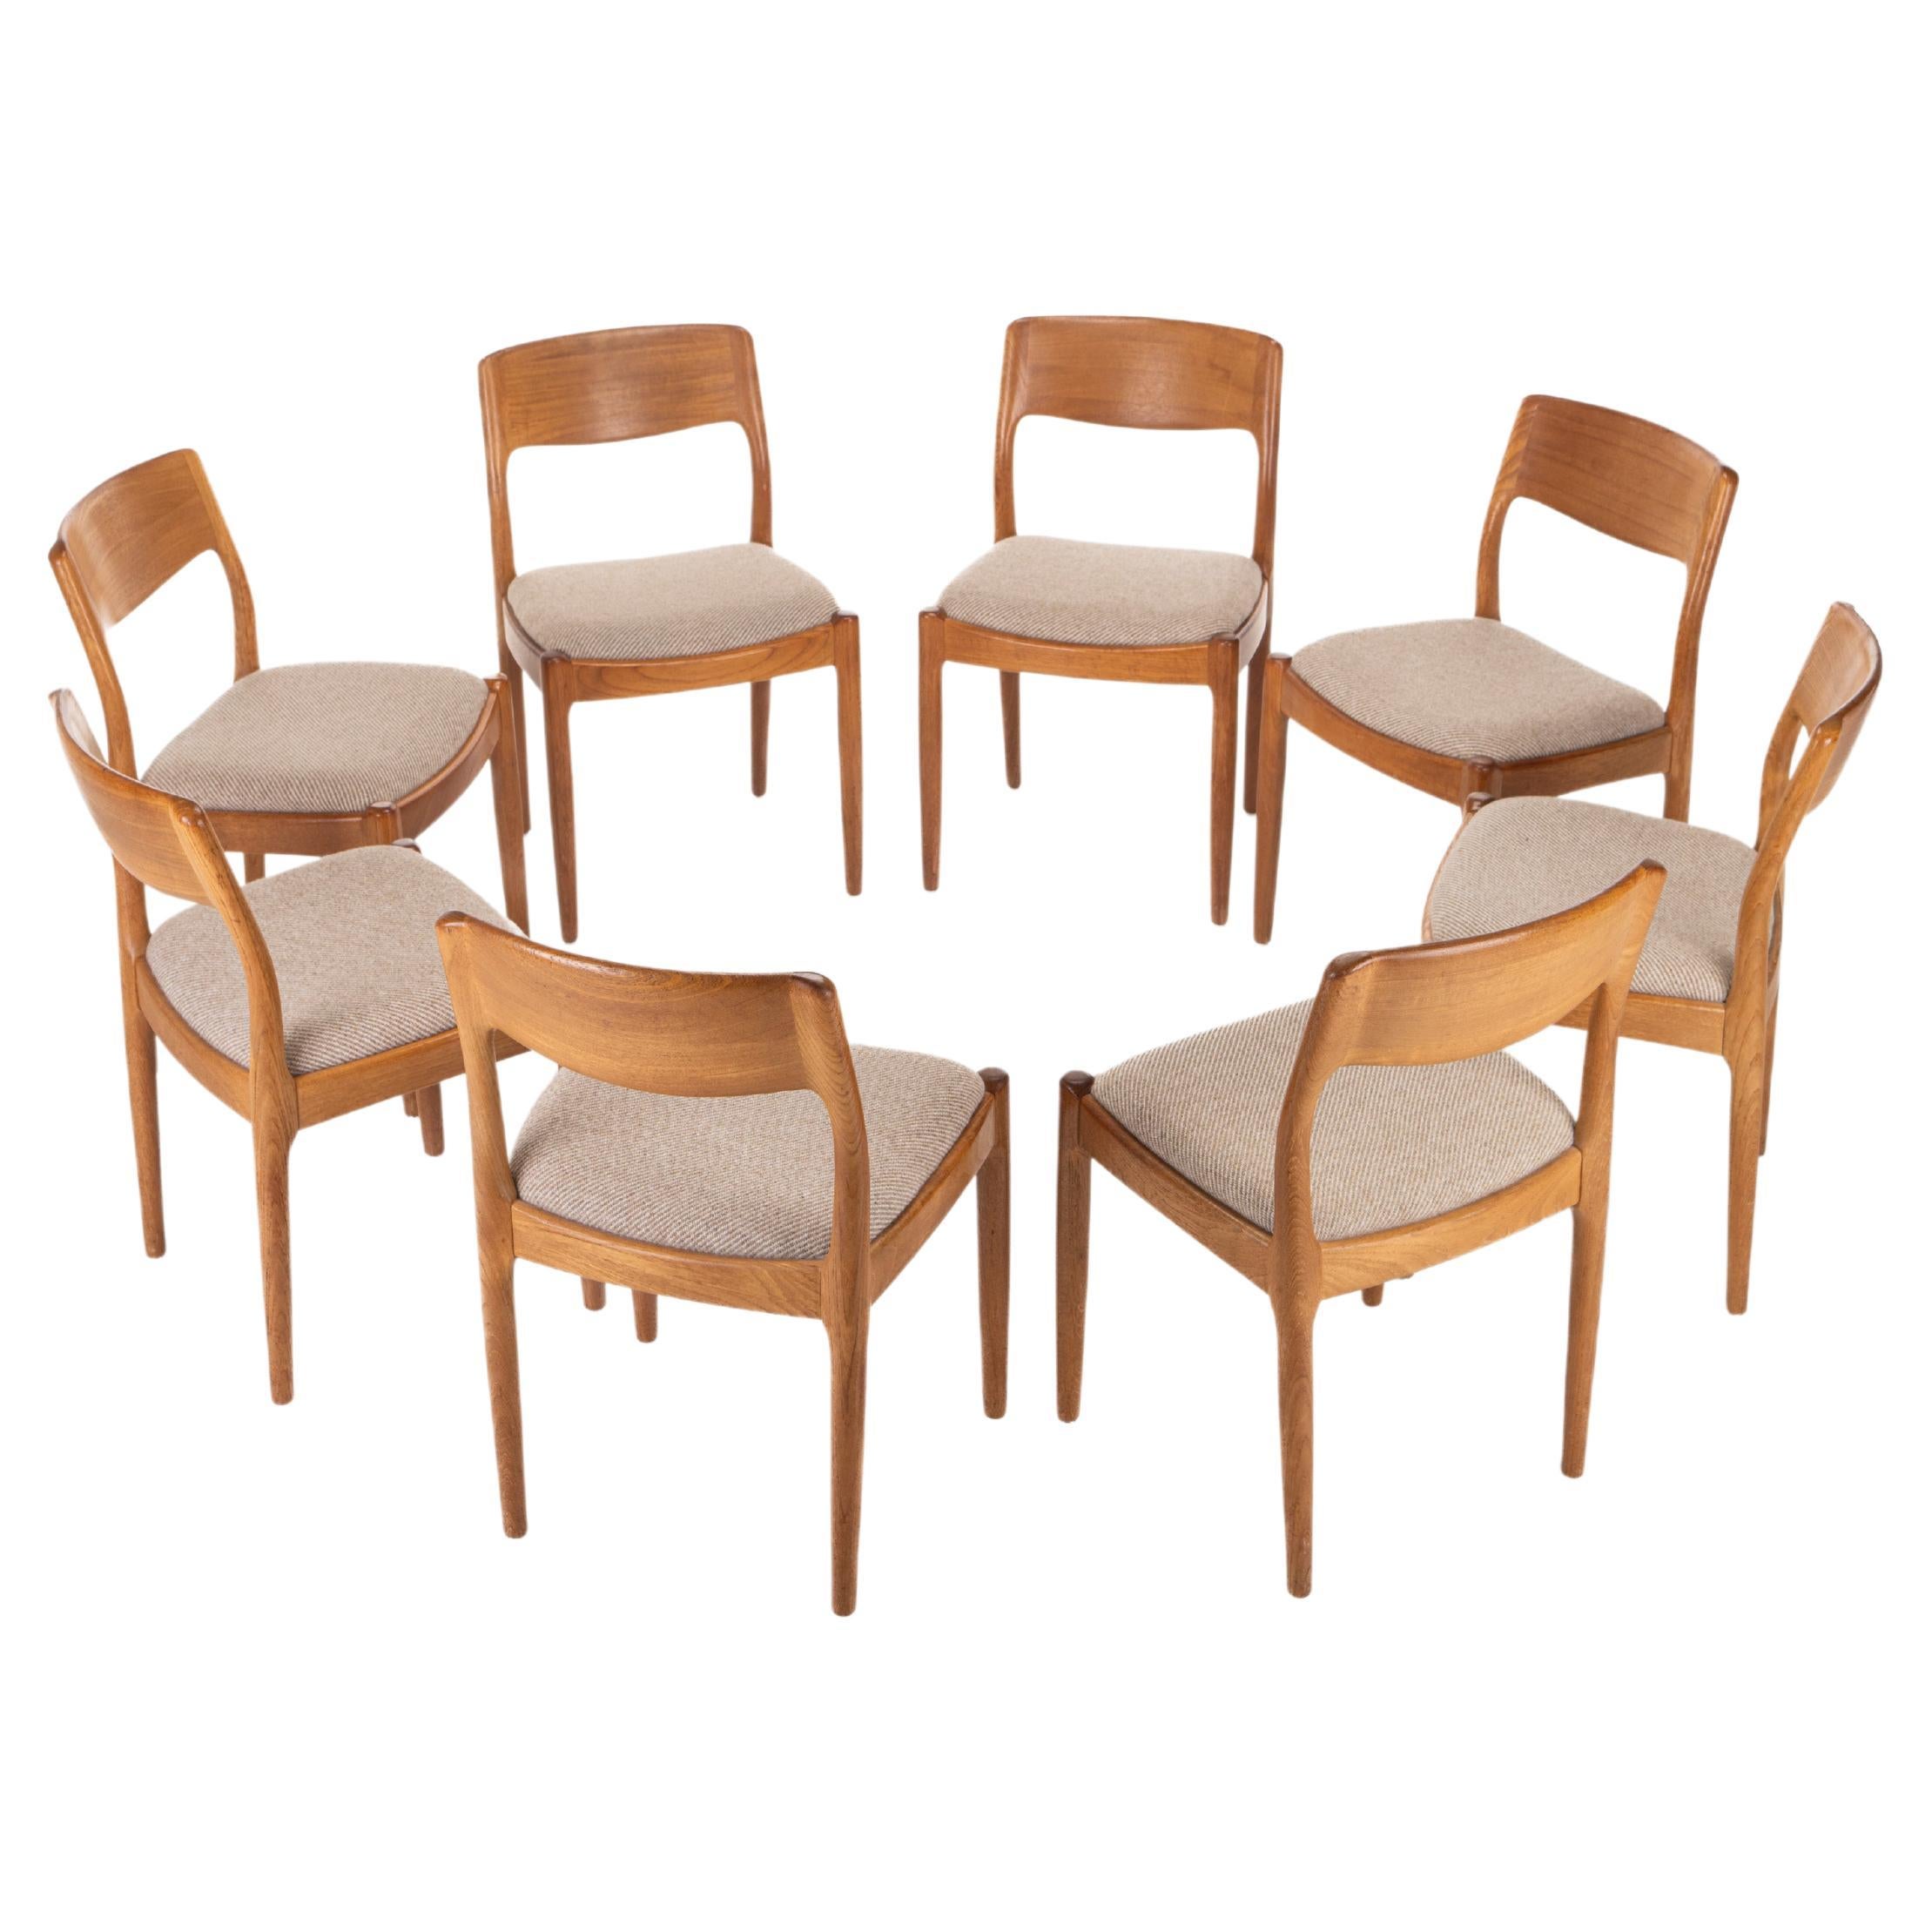 Set of 8 dining Chairs by Juul Kristensen for Jk Denmark, 1970s